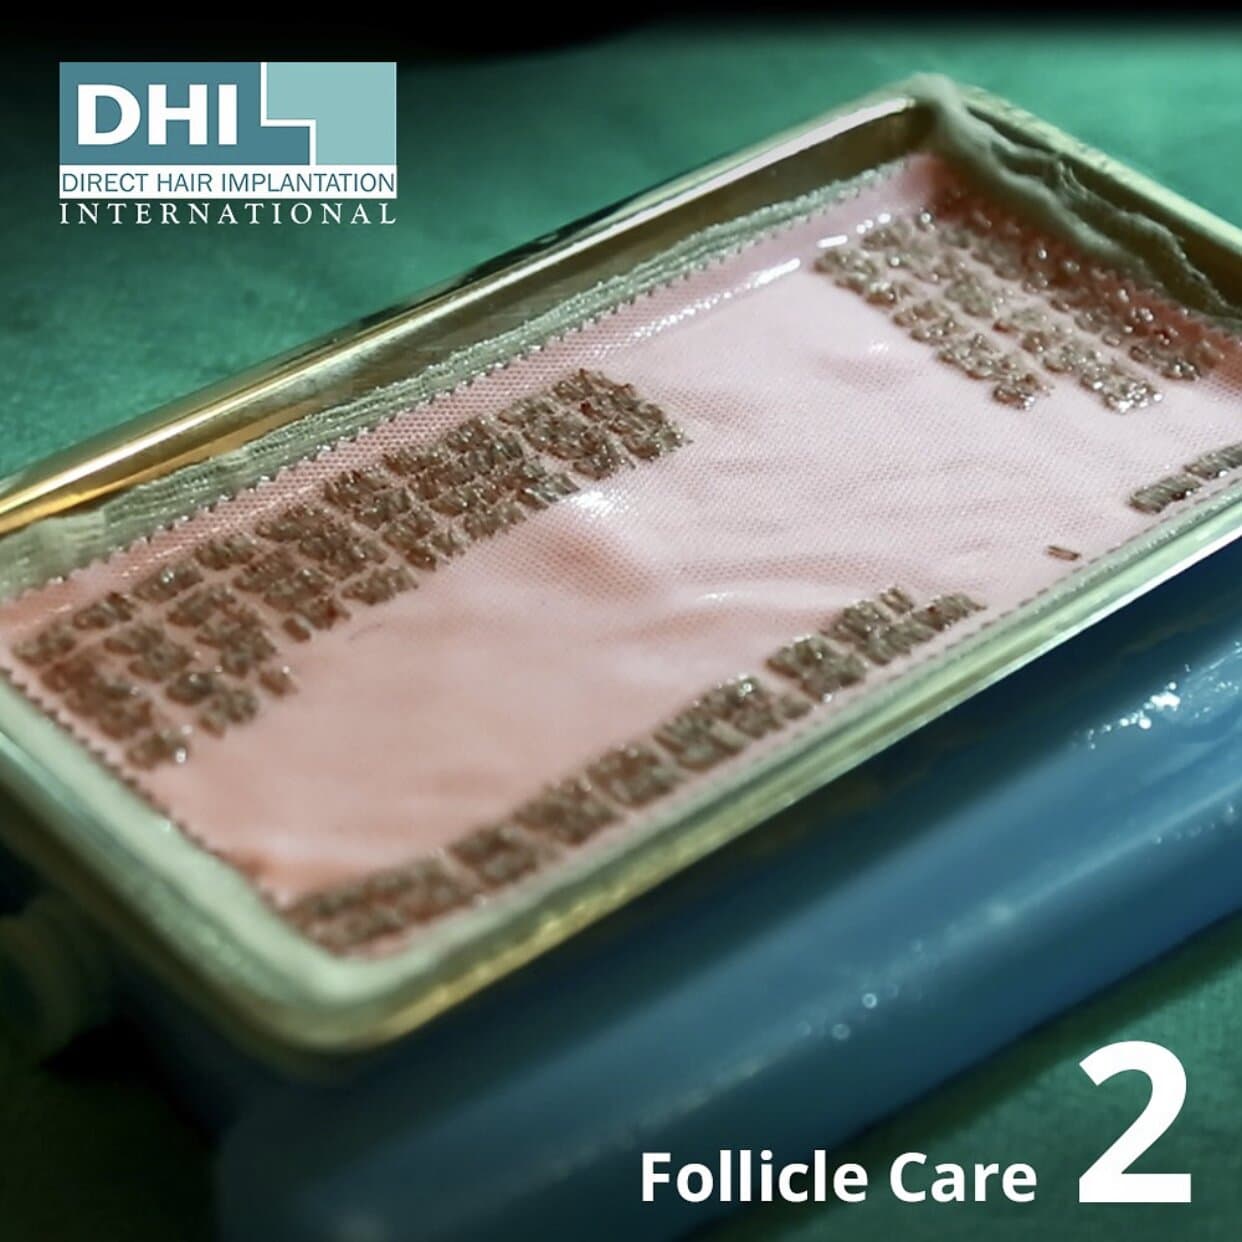 dhi hair transplant process 2 follicle care